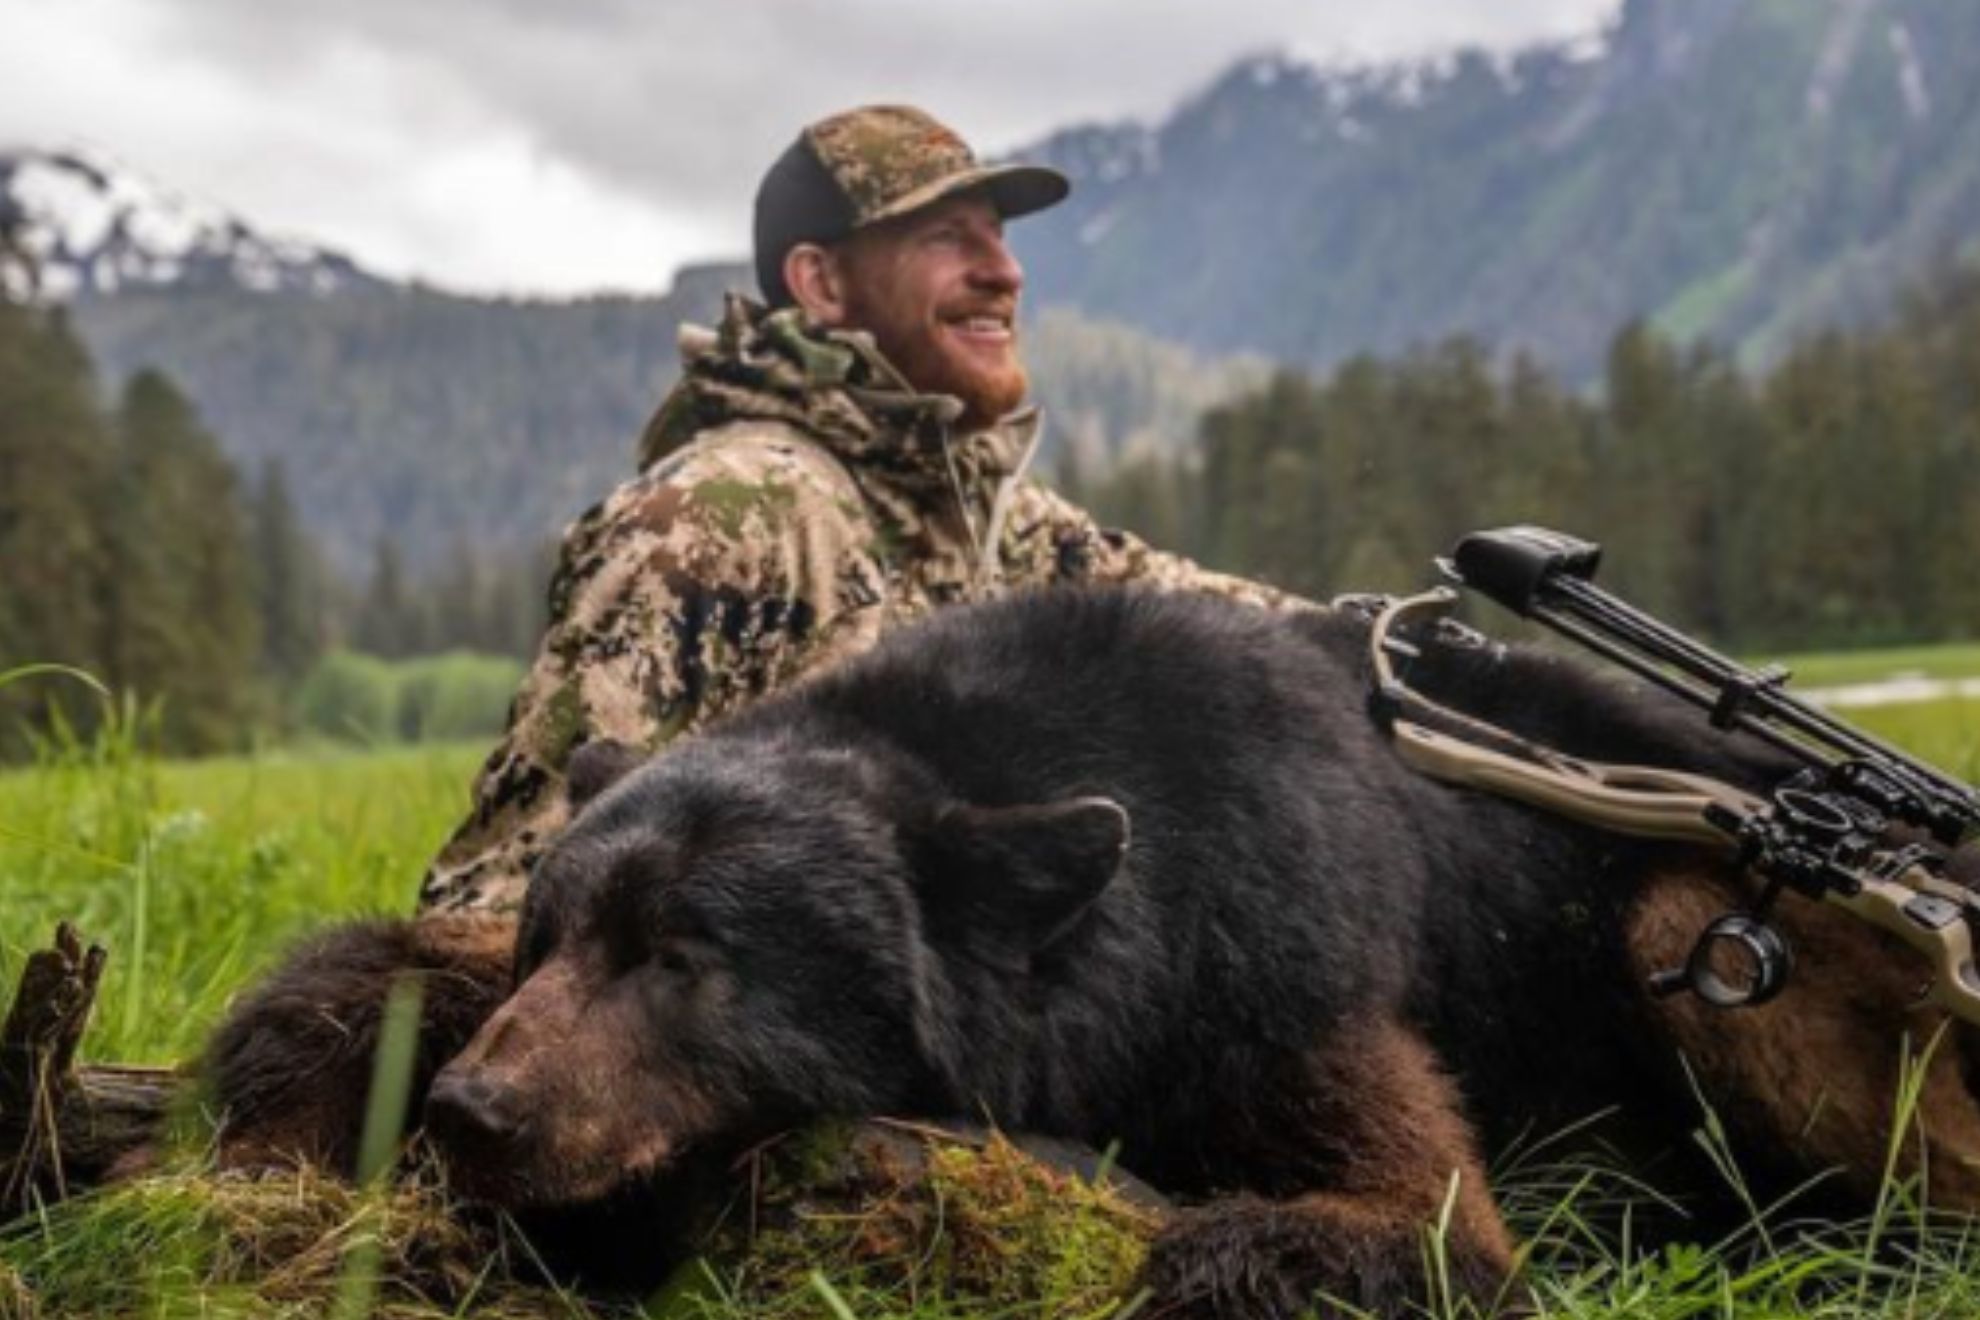 Carson Wentz executes bear with bow and arrow, calls it 'an incredible animal'